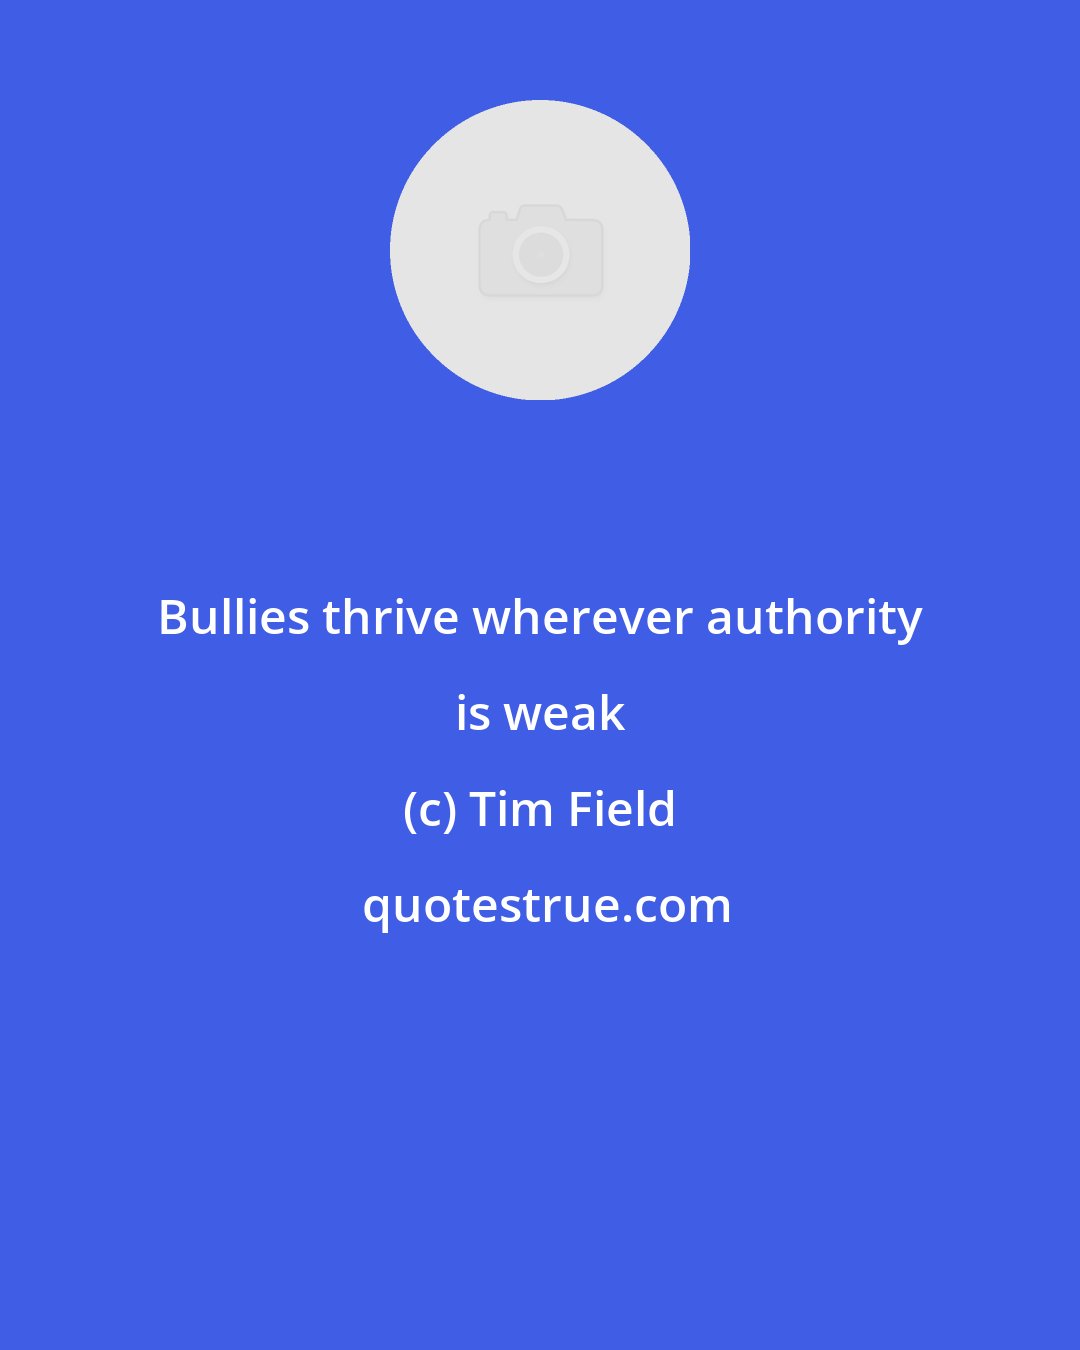 Tim Field: Bullies thrive wherever authority is weak